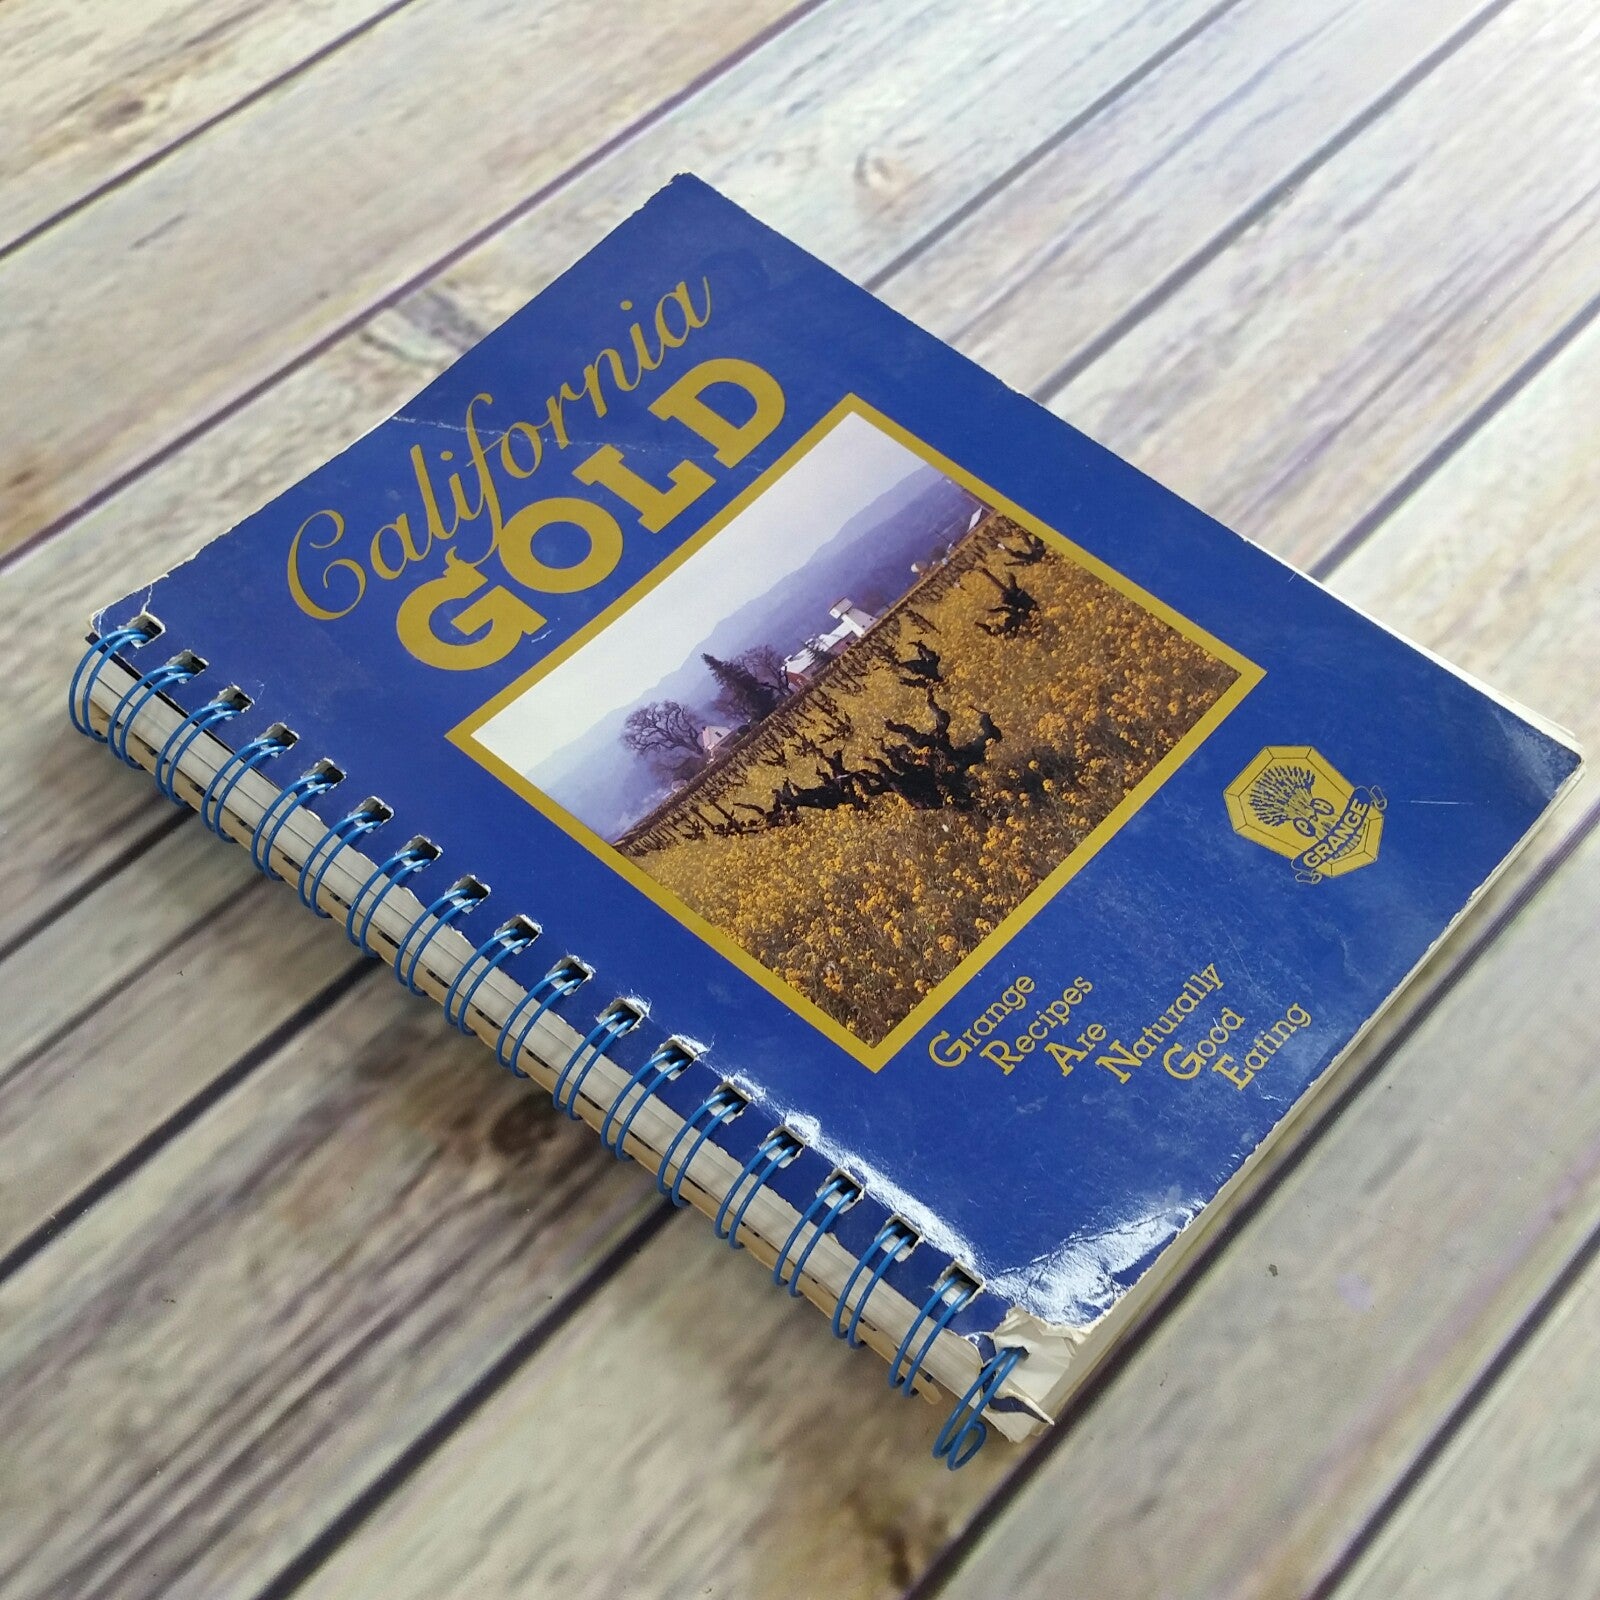 Vintage Northern California Cookbook Gold State Grange Recipes Rural State 1992 Spiral Bound - At Grandma's Table